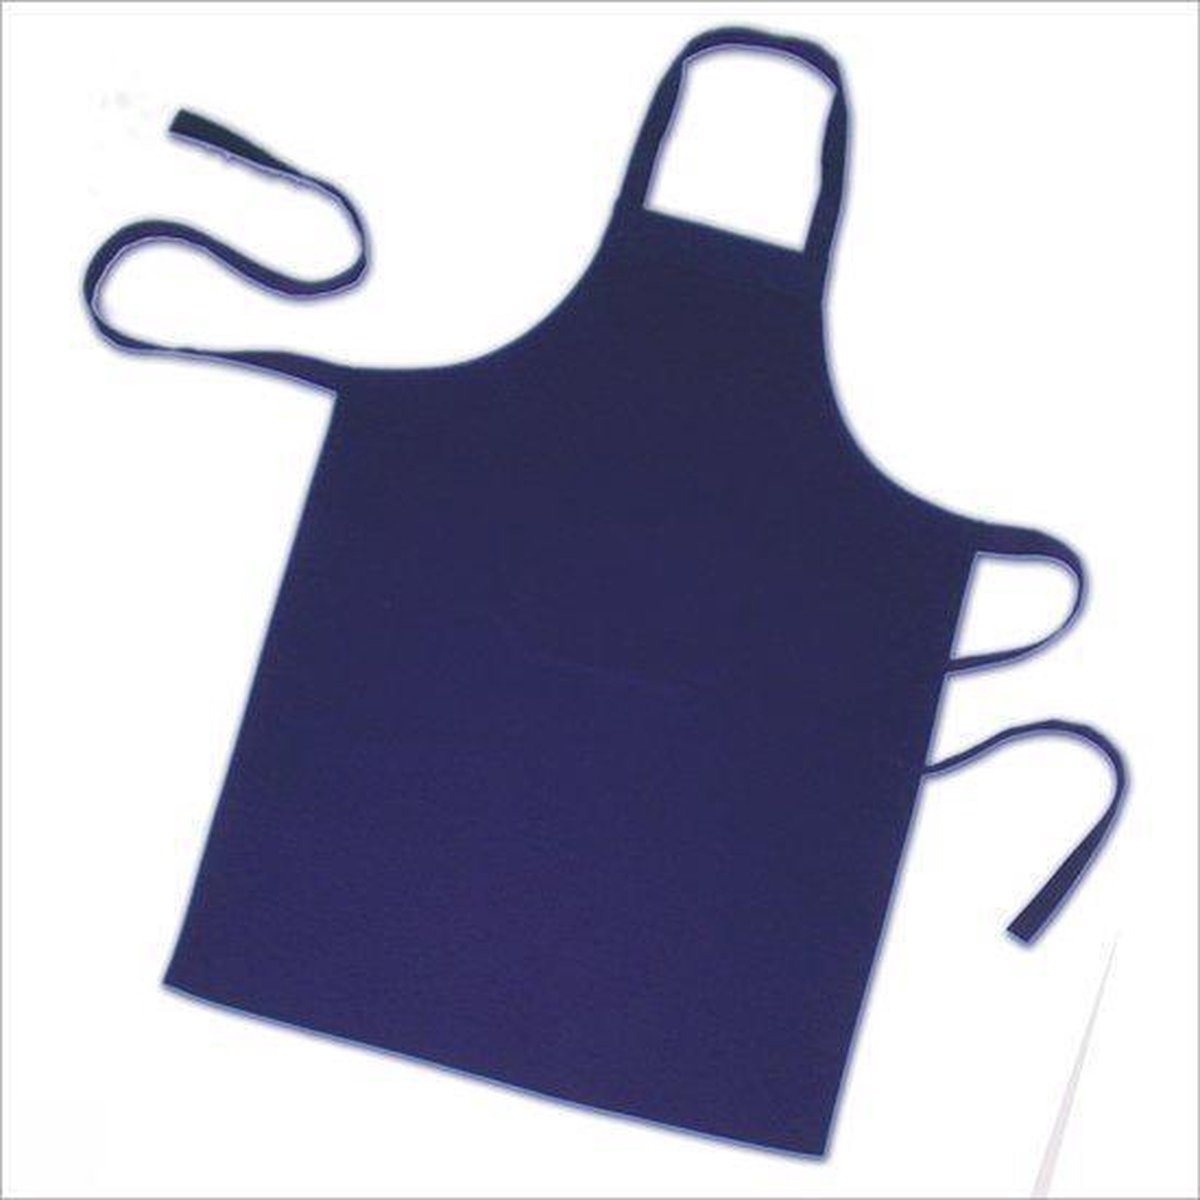 Homéé® Horeca suite Keukenschorten BBQ BIB Apron 240g. p/m2 - marine blauw - 70x100 cm - Homéé®